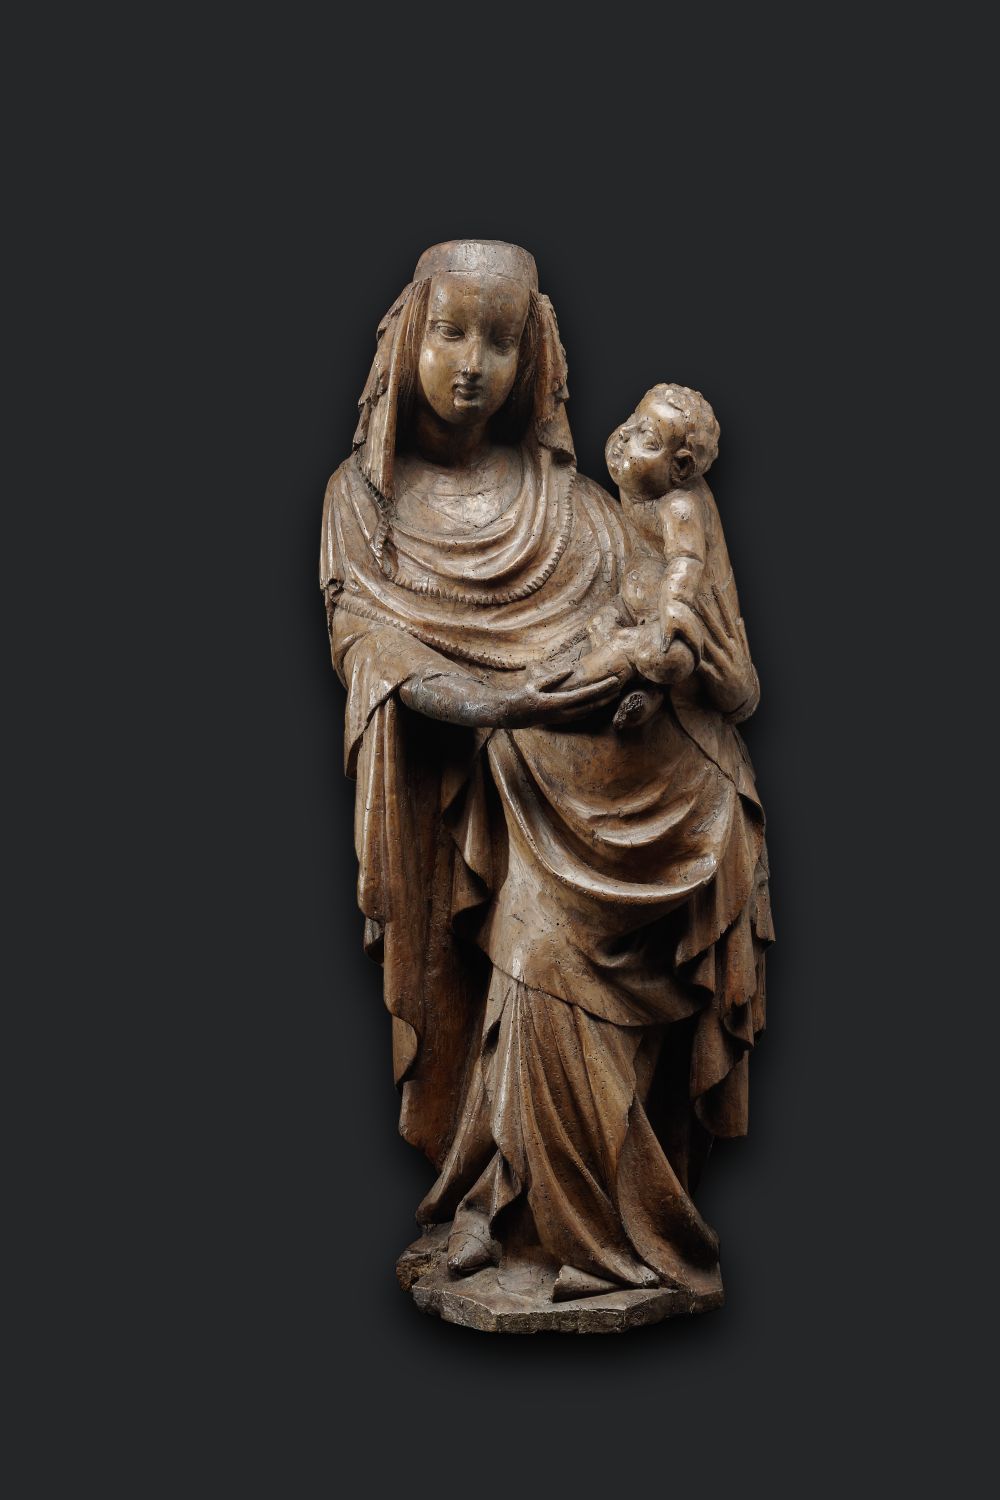 Madonna mit Kind, Salzburg, 1370–80, Lindenholz, Salzburg Museum, Inv.-Nr. 178-32